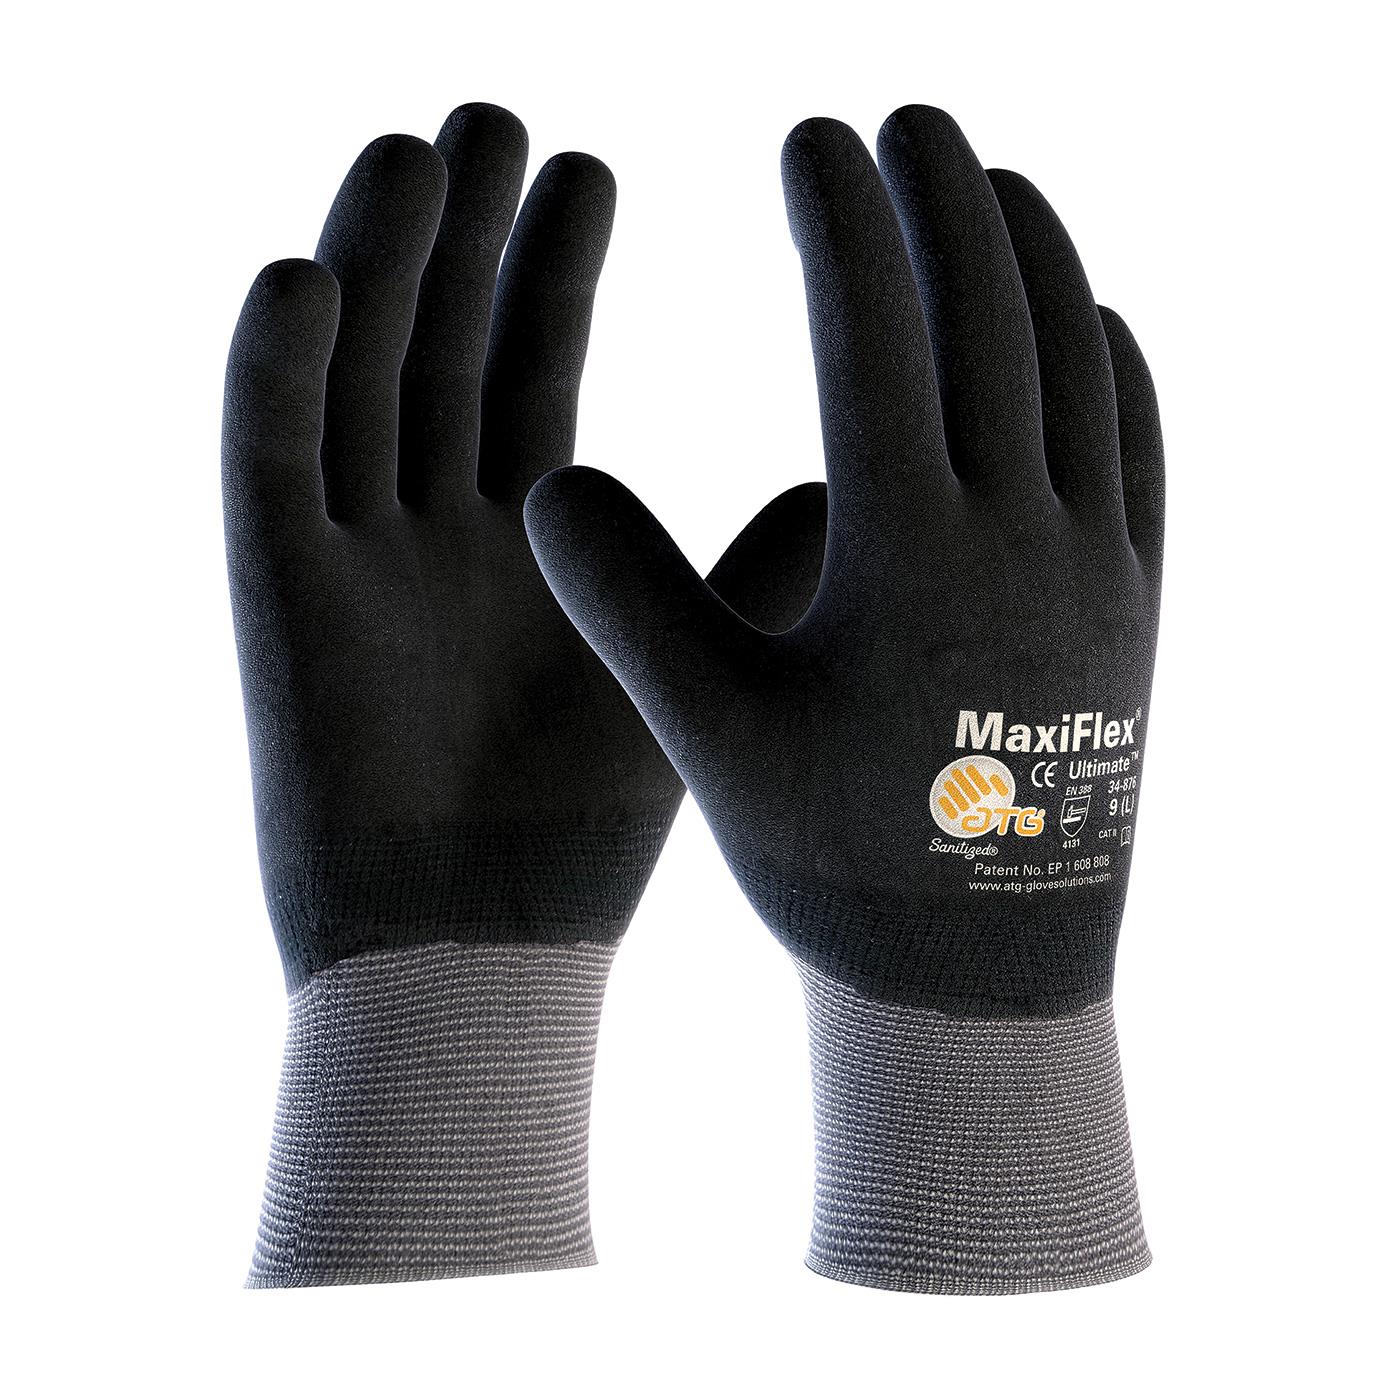 MAXIFLEX ULTIMATE MICROFOAM FULL NITRILE - Nitrile Coated Gloves